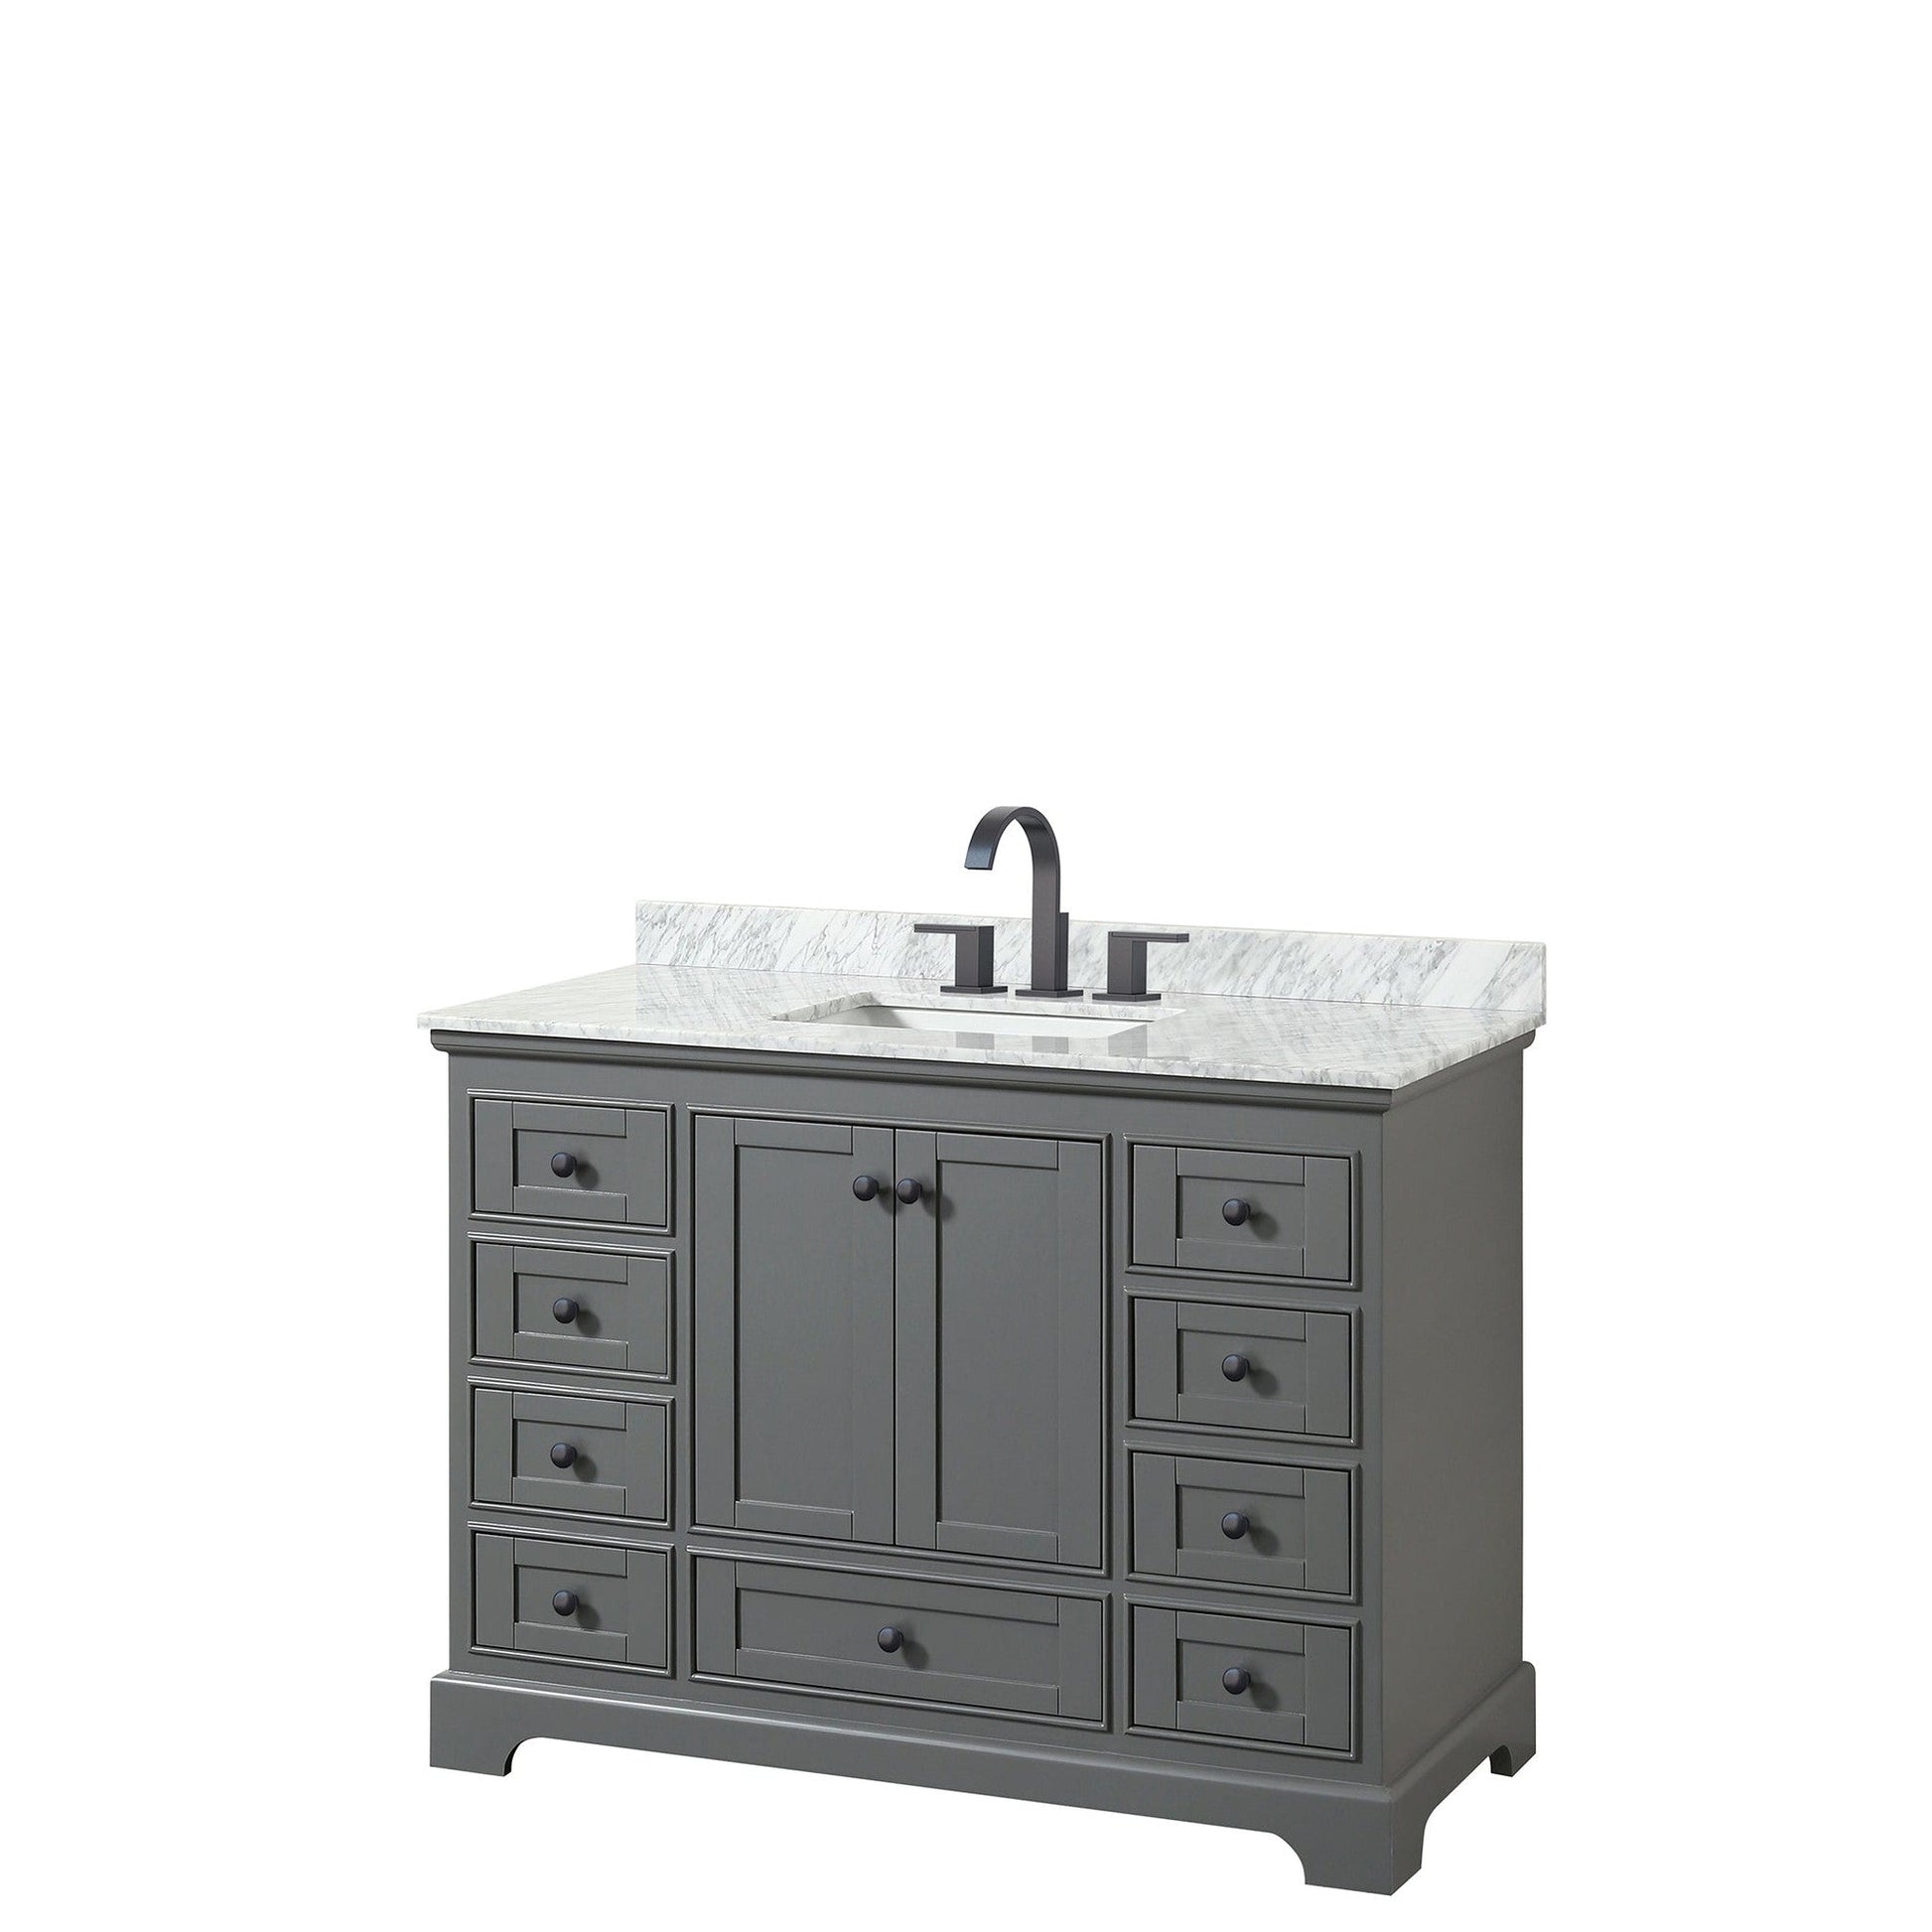 Deborah 48" Single Bathroom Vanity in Dark Gray, White Carrara Marble Countertop, Undermount Square Sink, Matte Black Trim